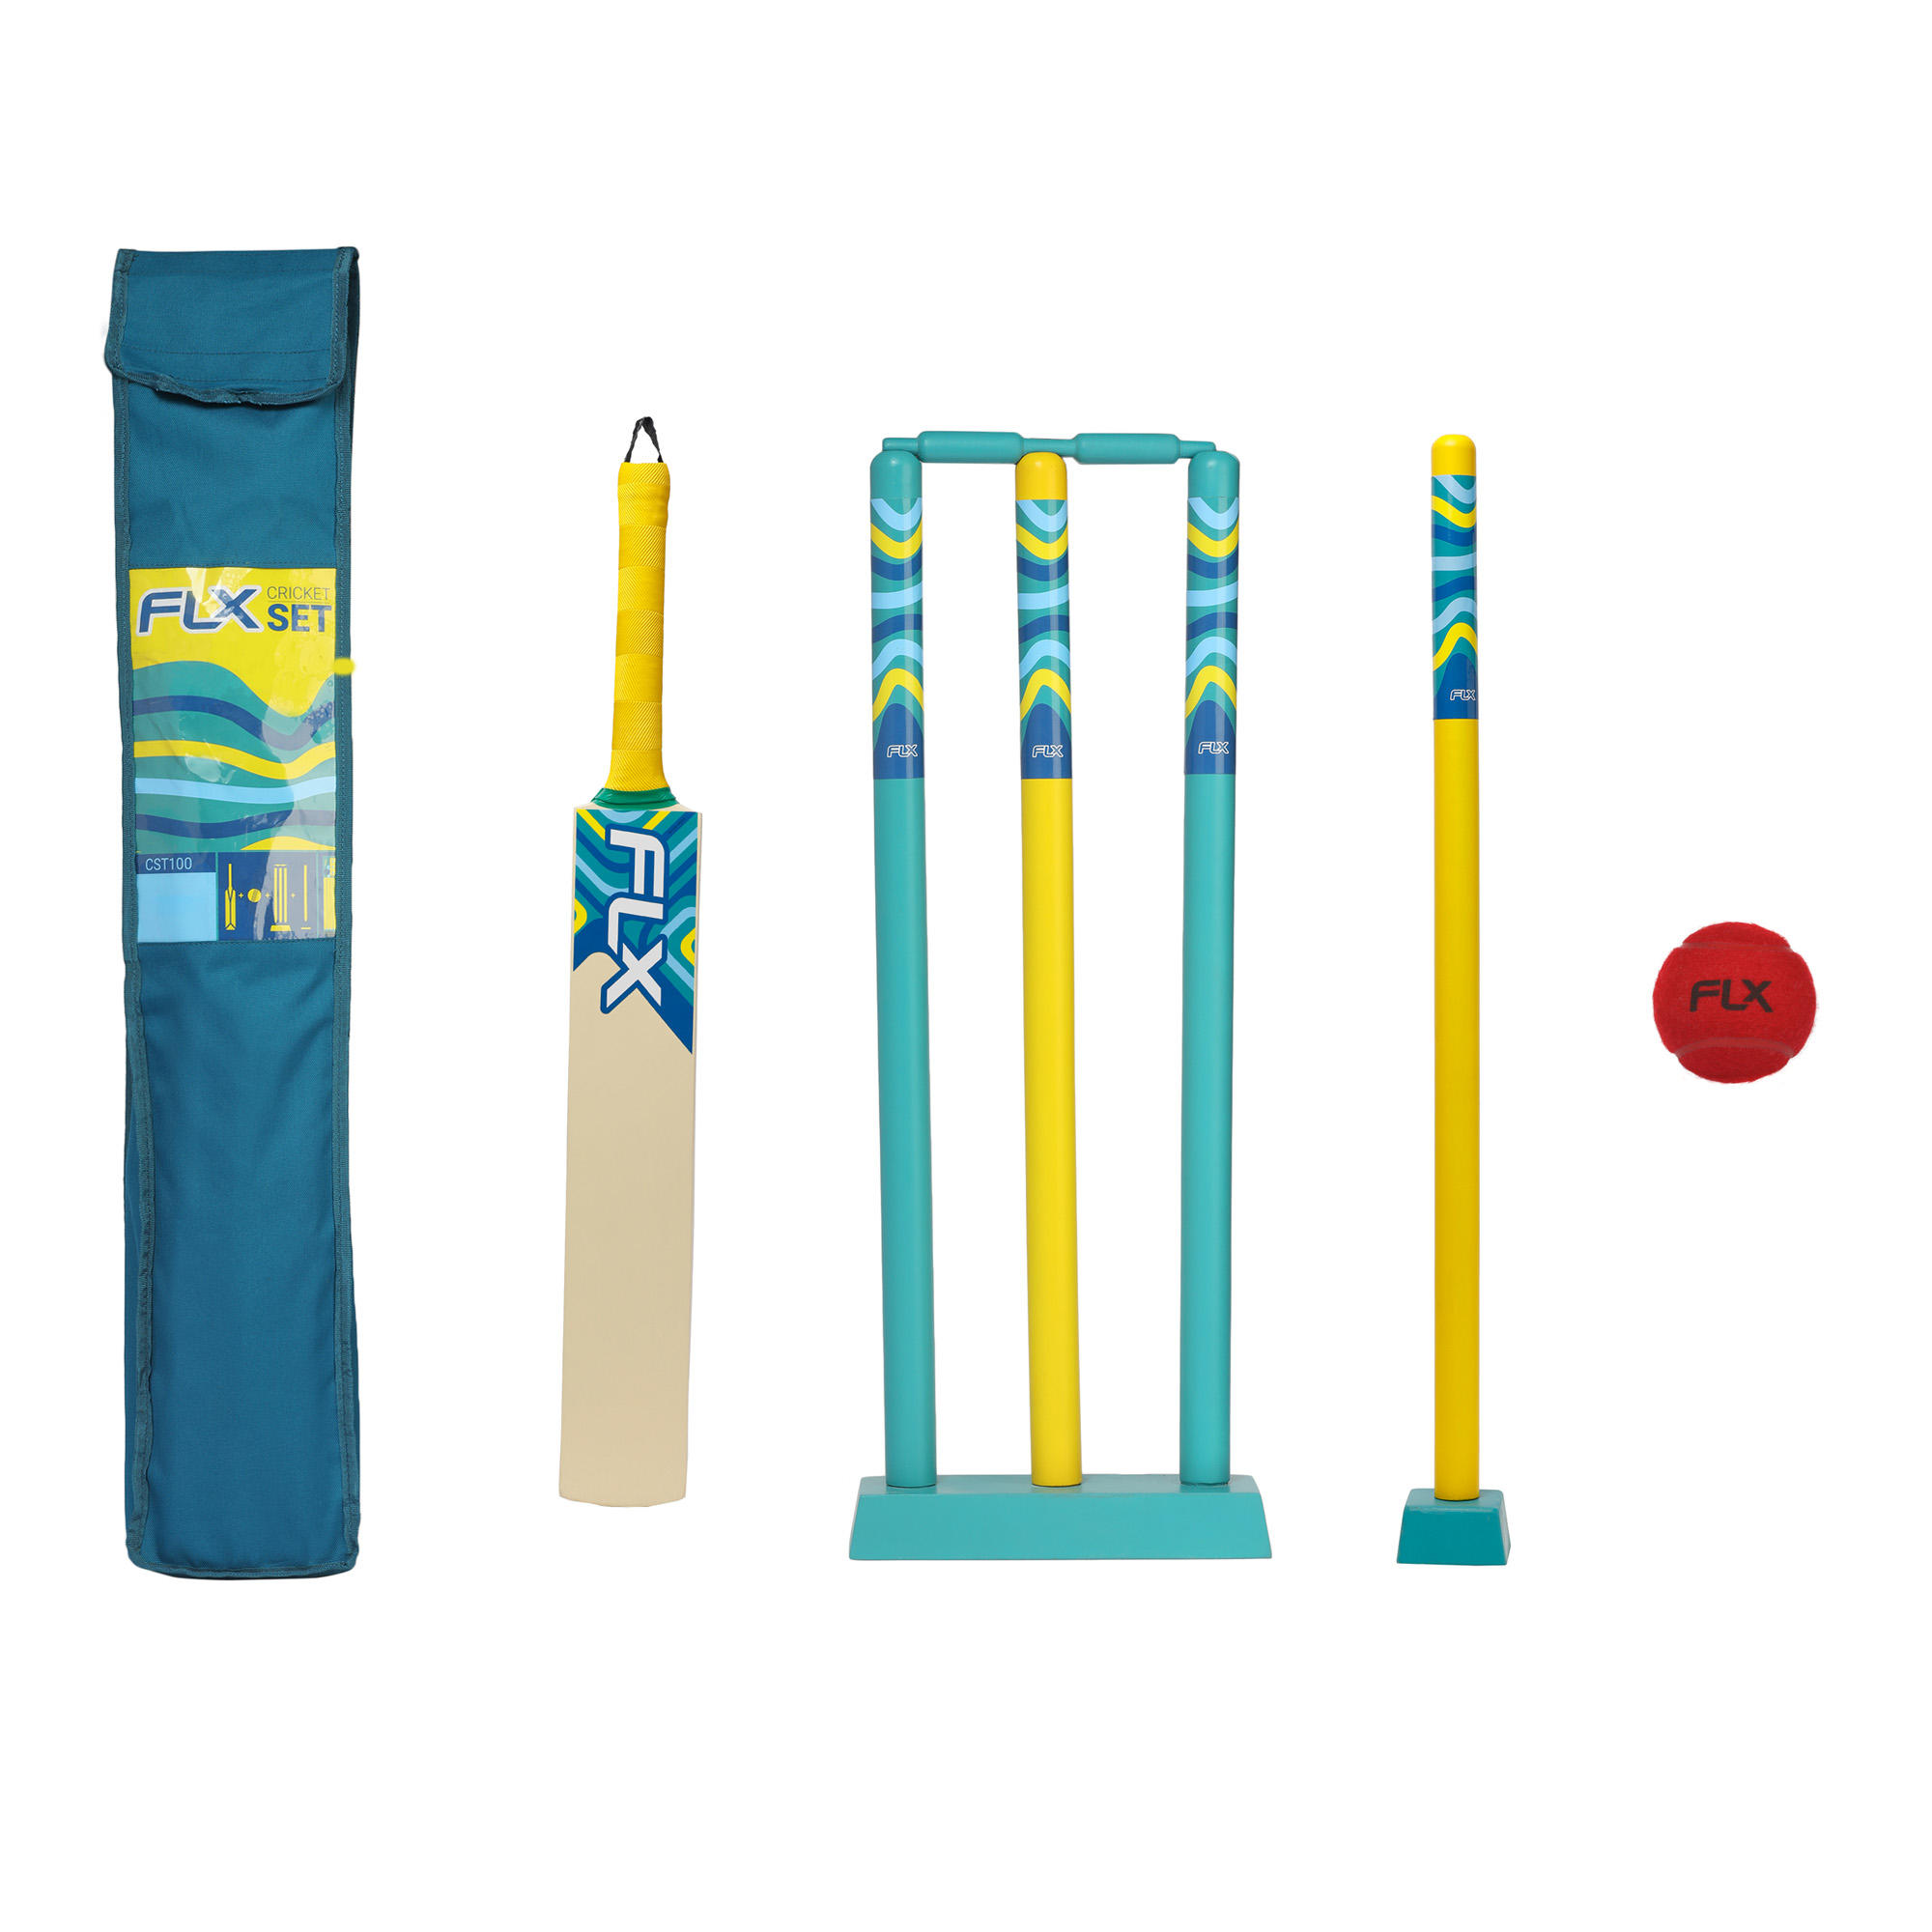 decathlon cricket kit price